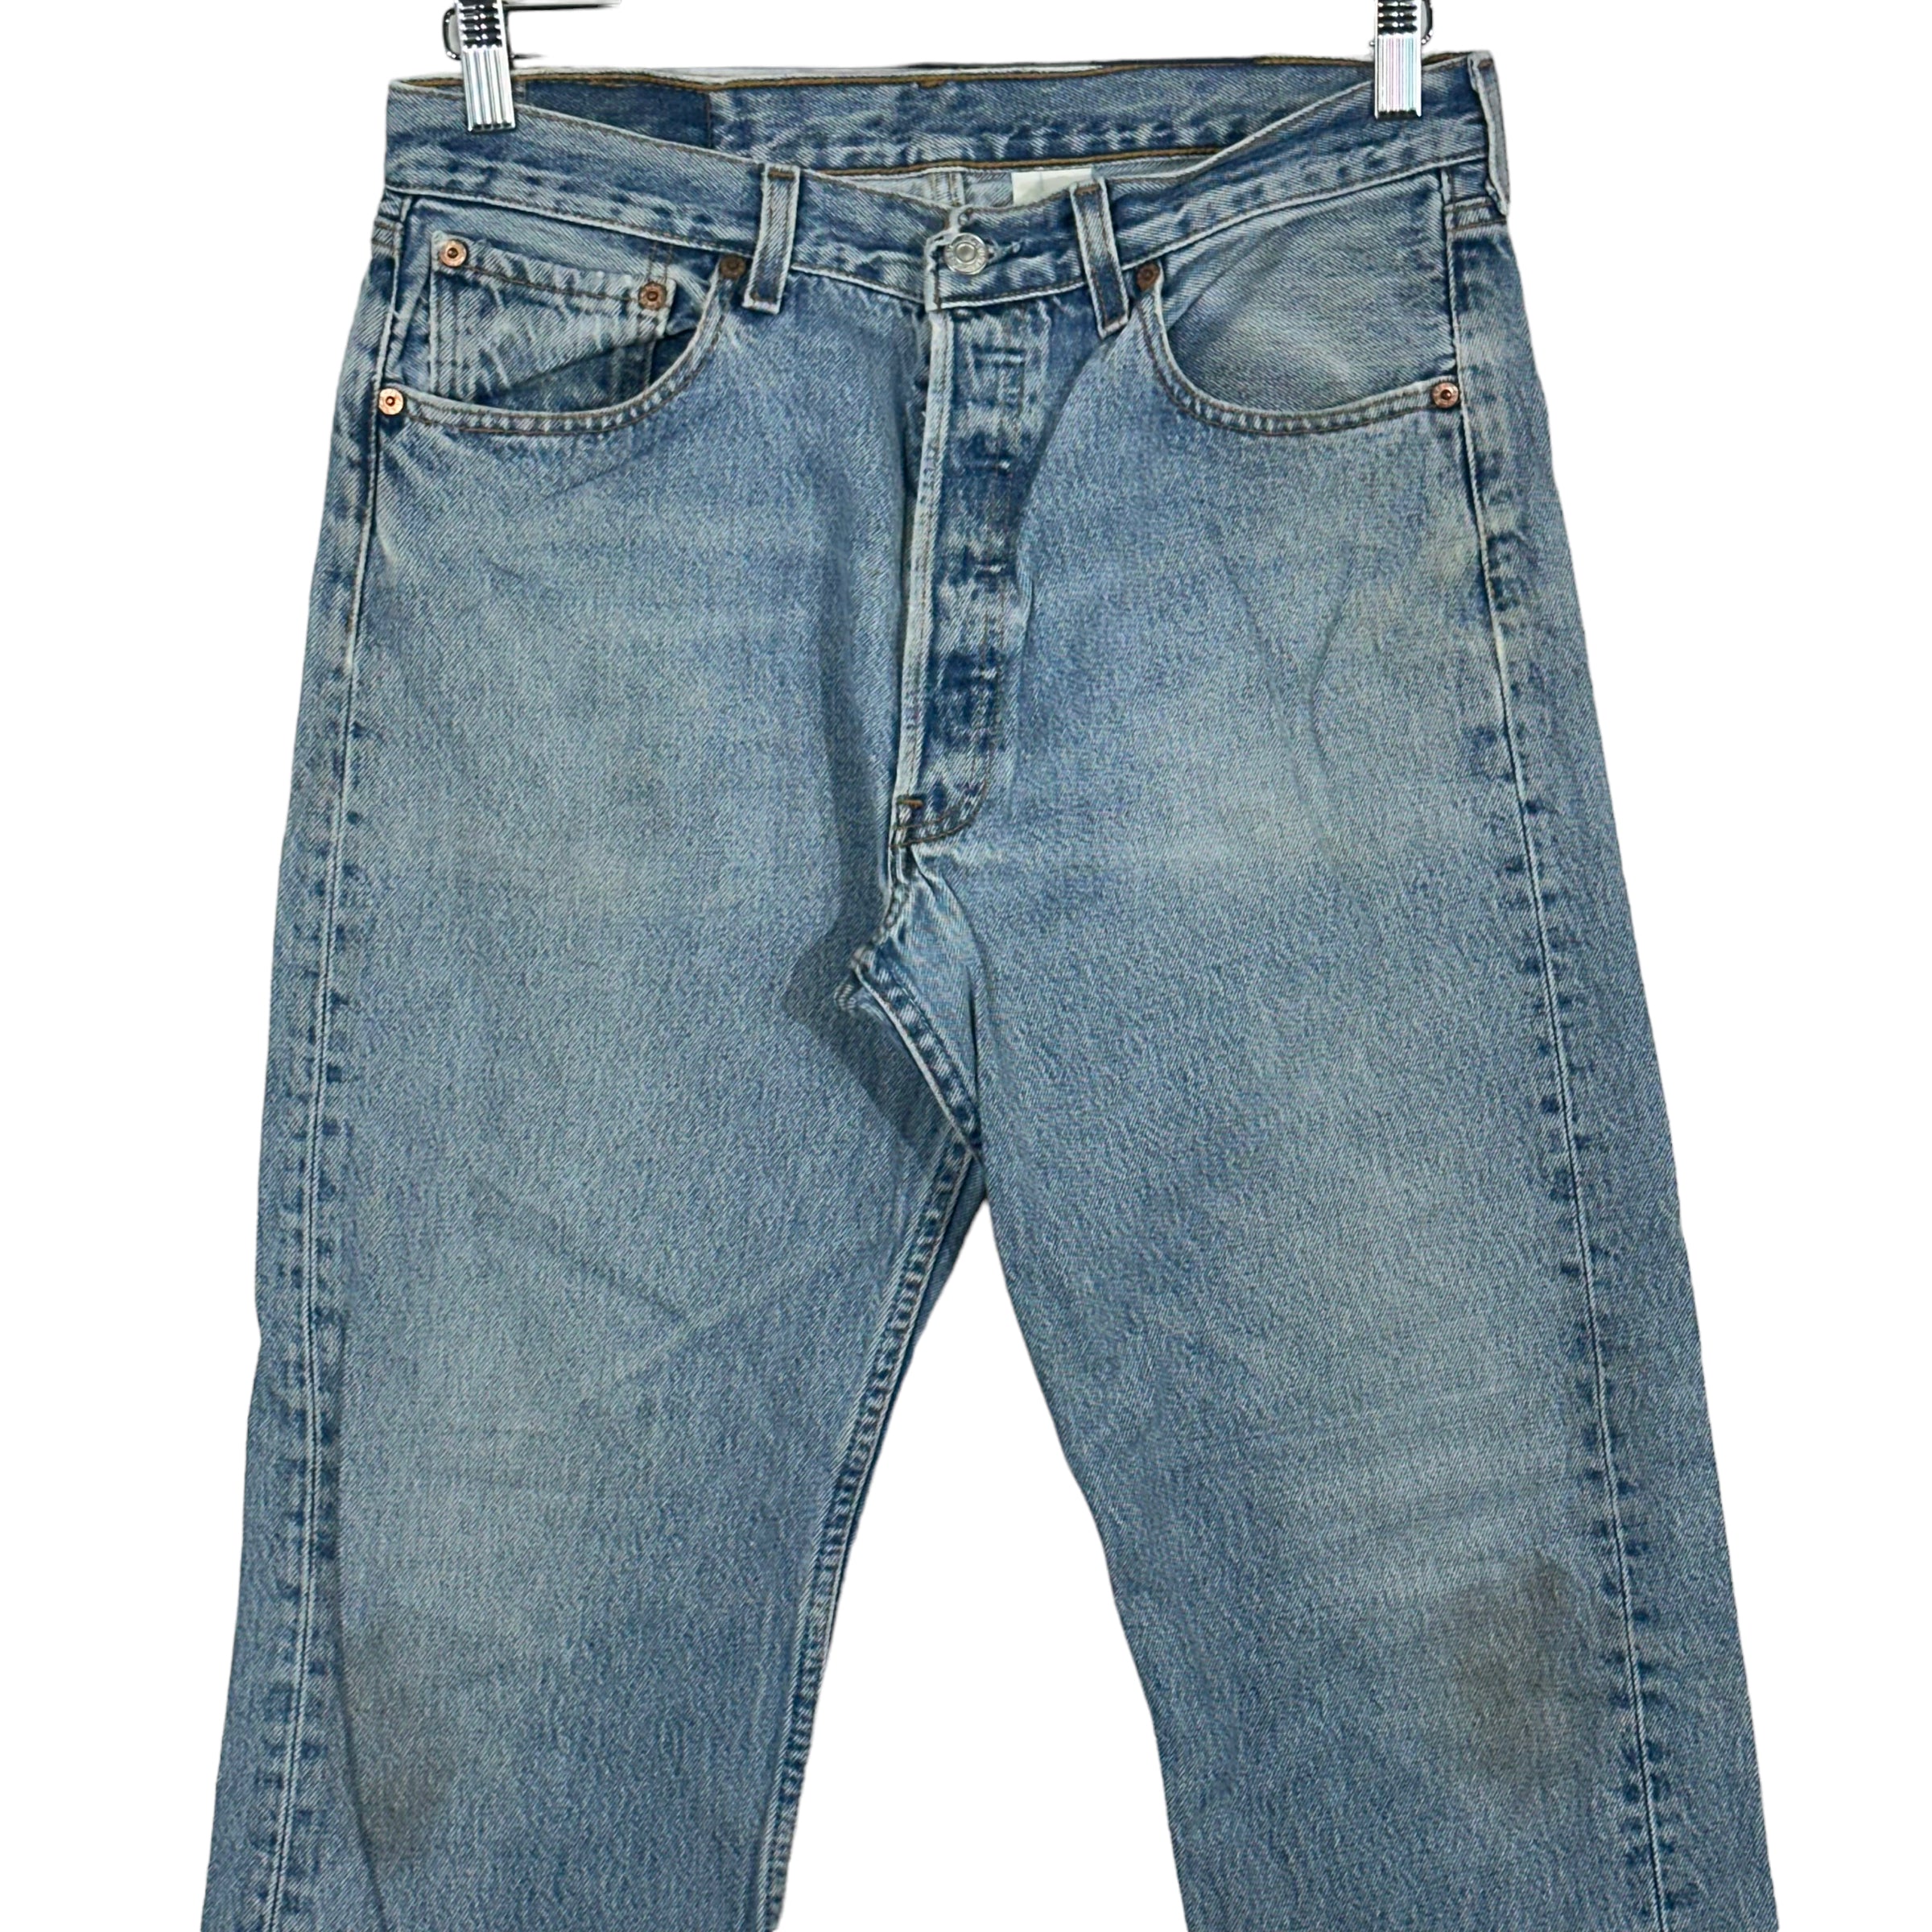 Vintage Levi's 501 Light Wash Straight Leg Distressed Denim Jeans